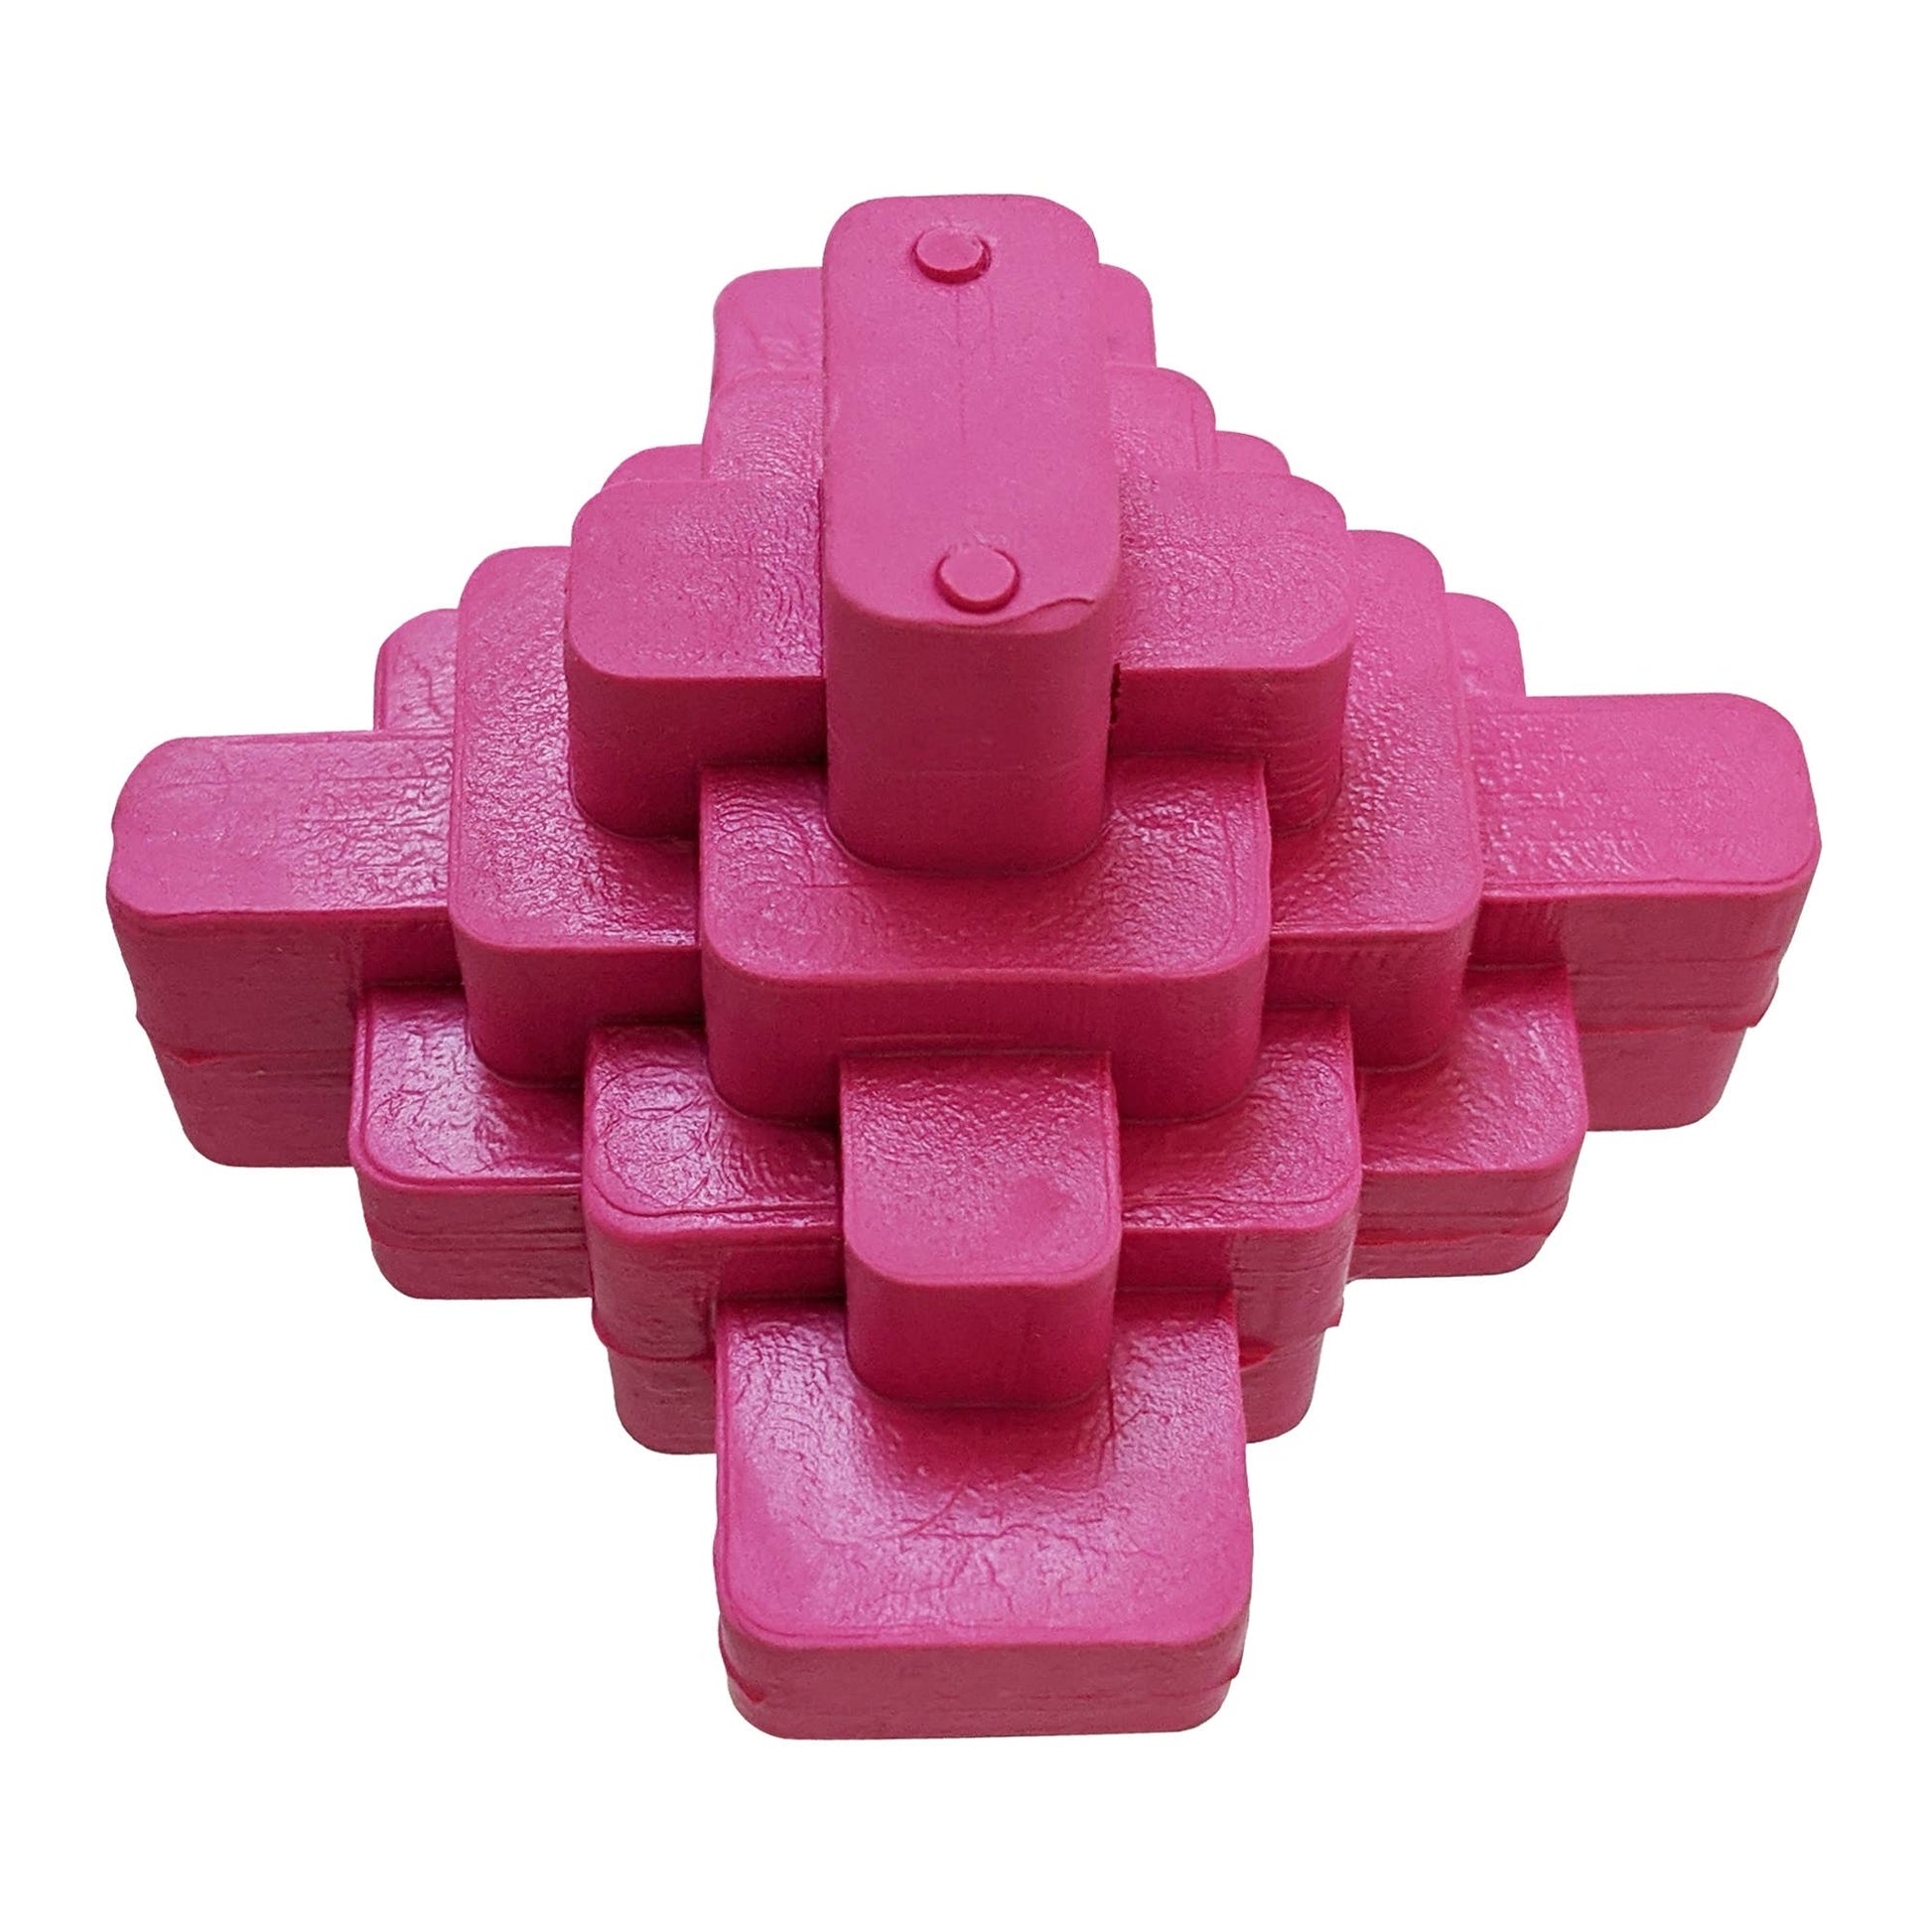 Geometric TPR Dog Chew Toy - Pink-1